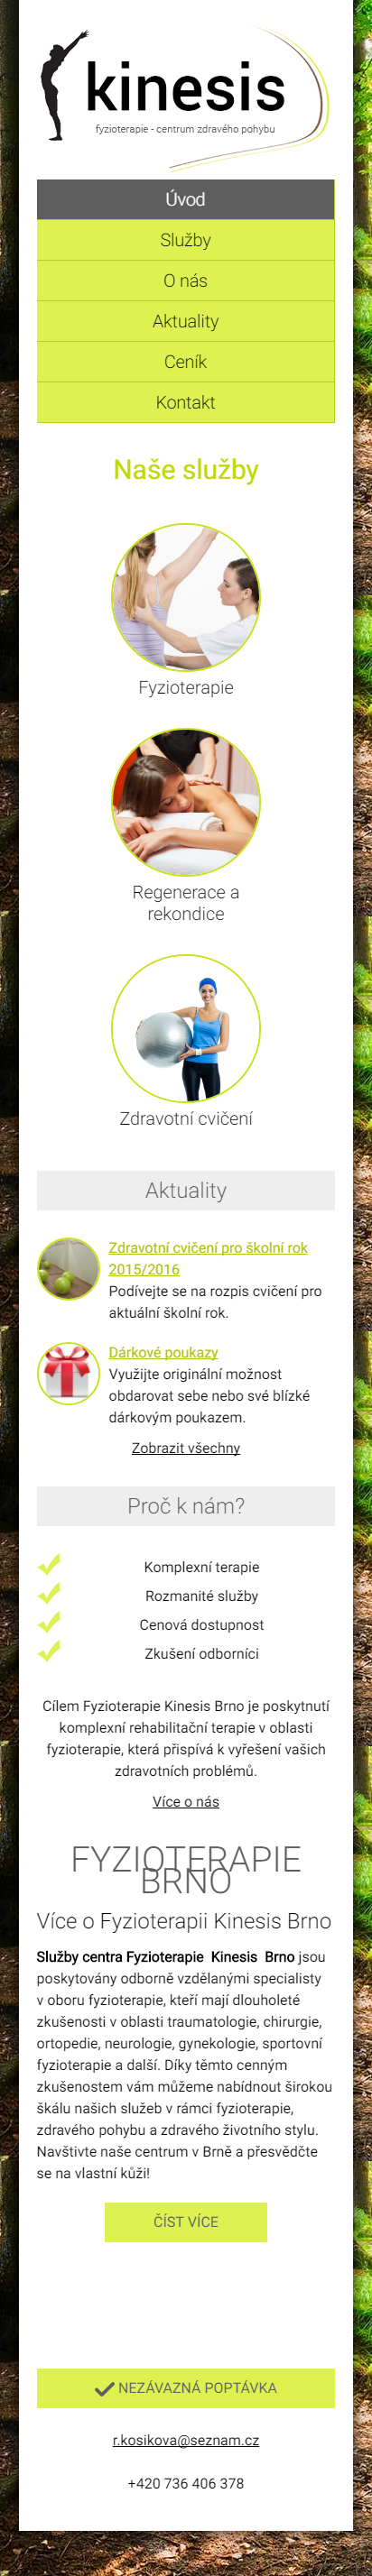 Fyzioterapie-Kinesis.cz - Screenshot mobilní verze